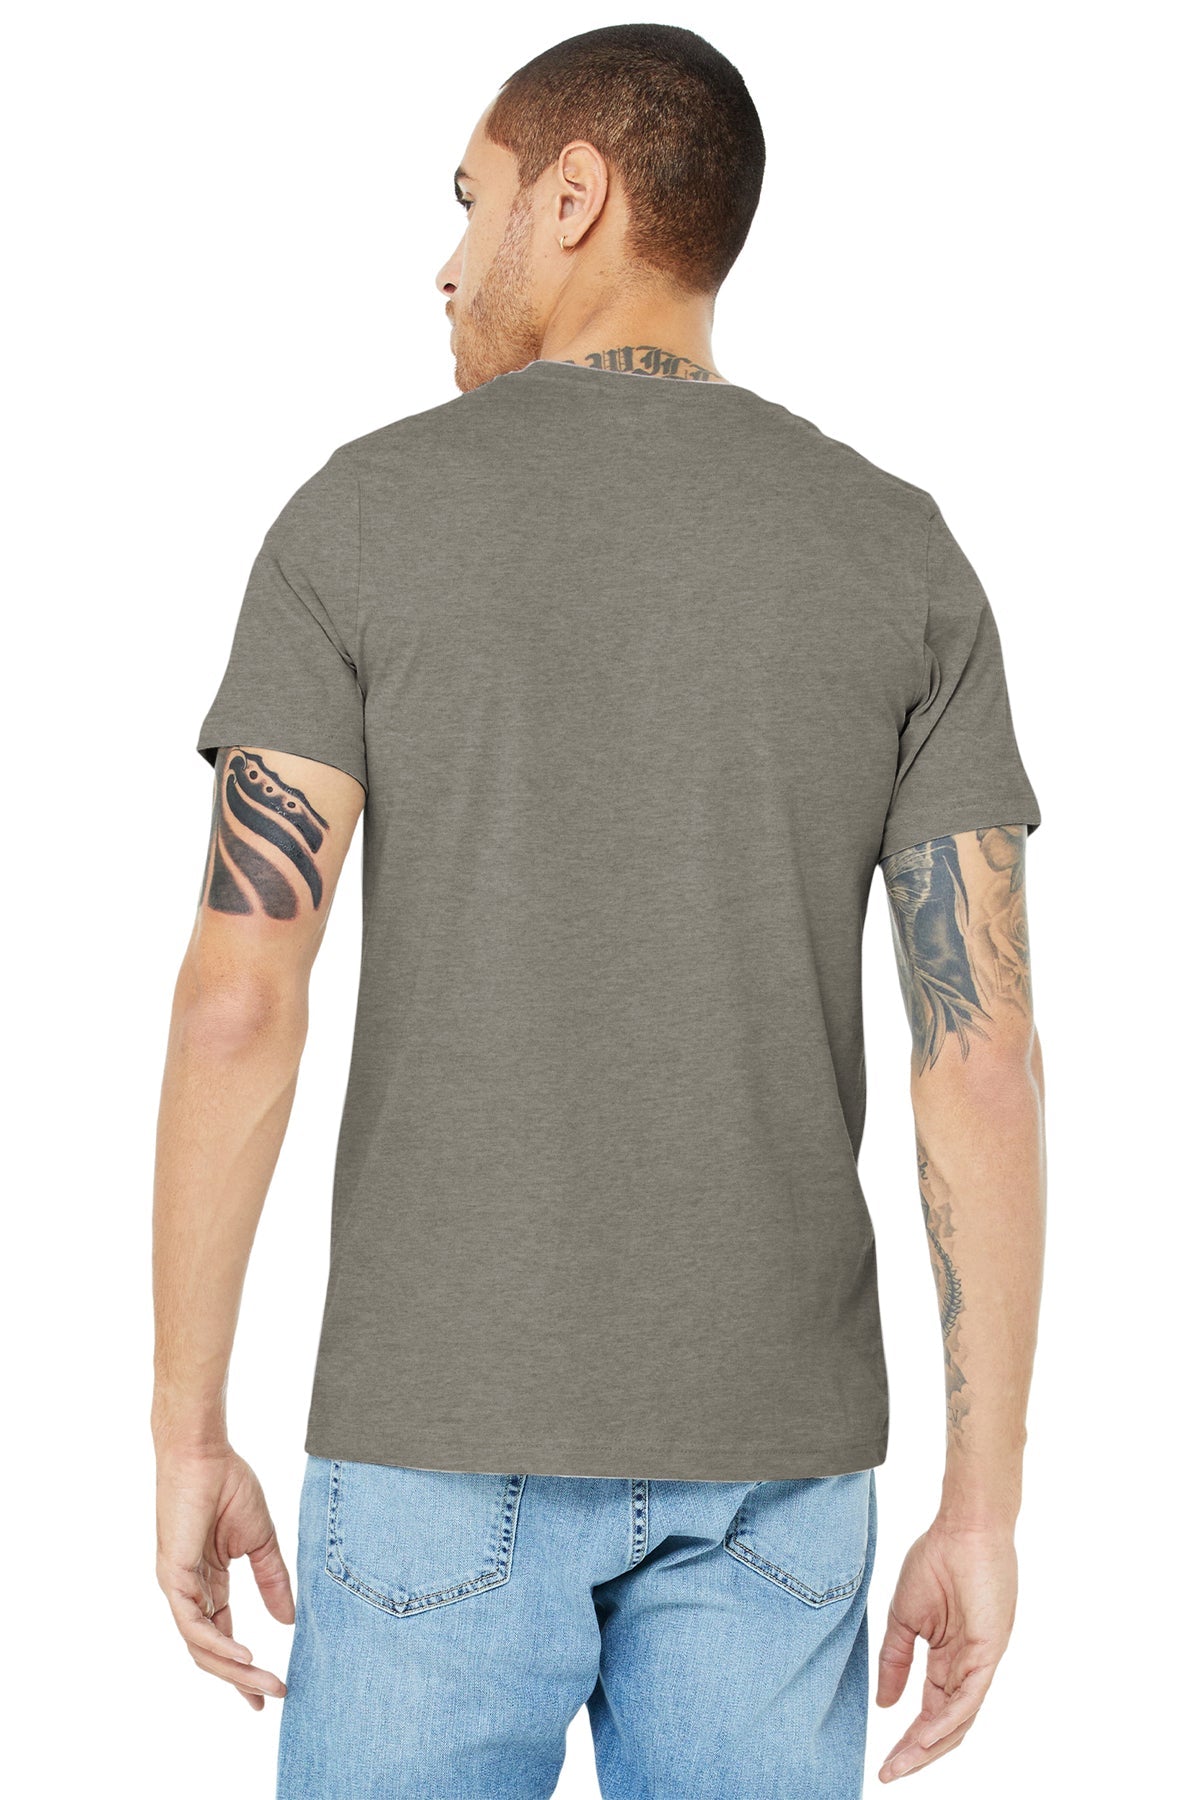 bella + canvas unisex jersey short sleeve t-shirt 3001c heather stone